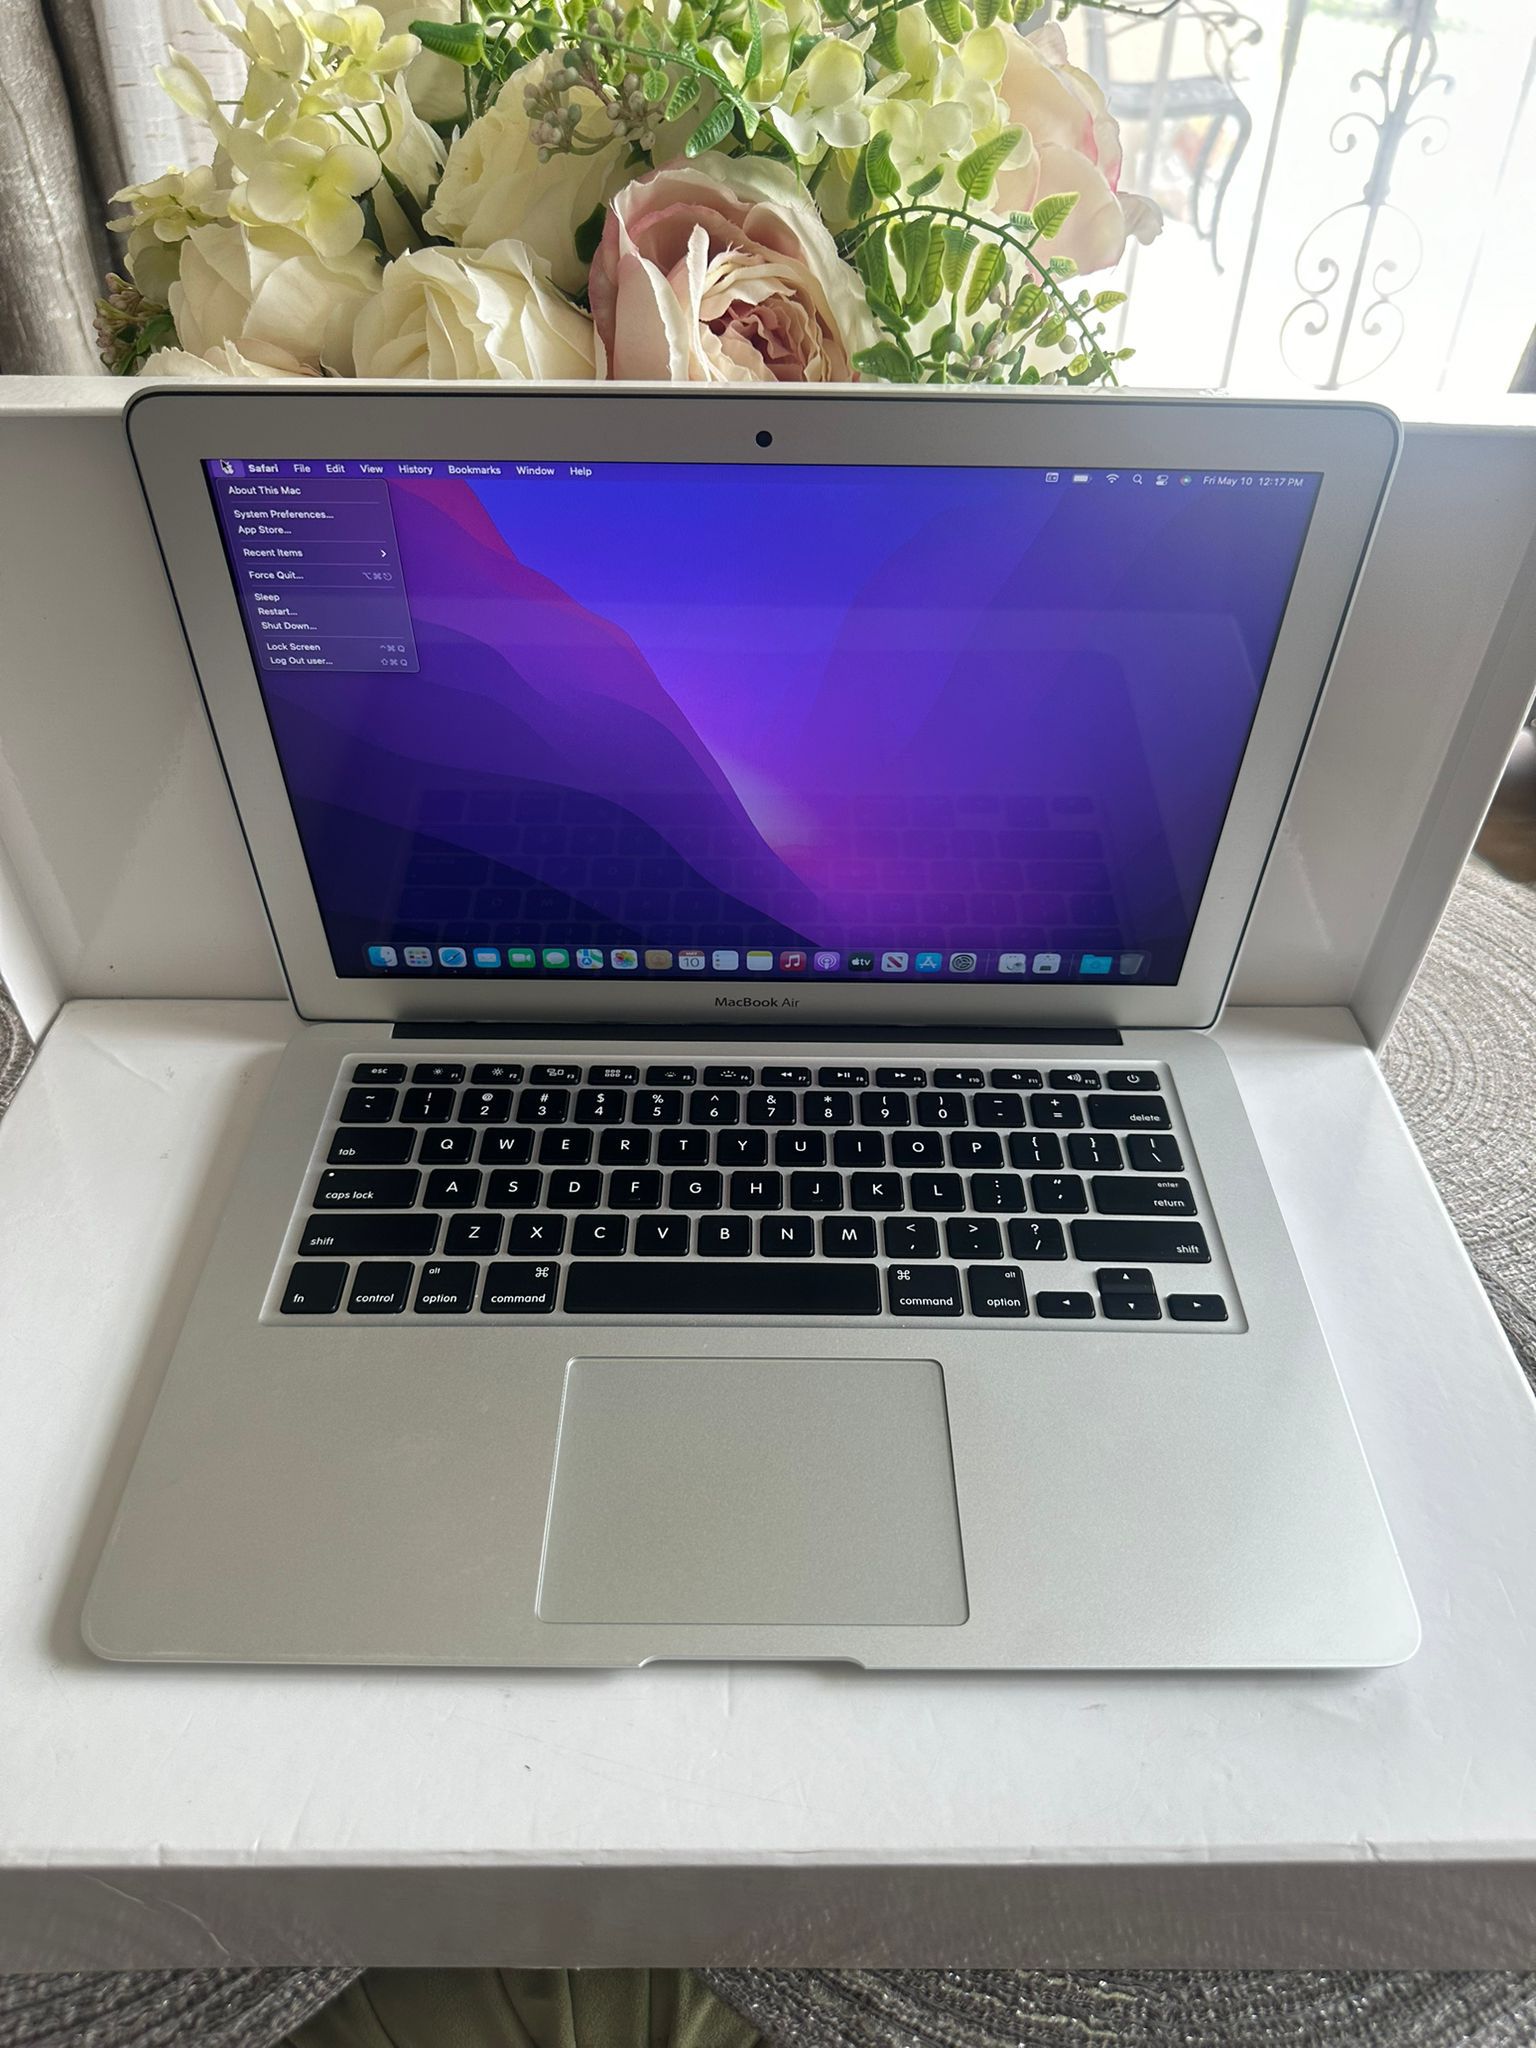 Apple MacBook Air A1466 13” Laptop 2017 Intel i5 8GB RAM 128GB SSD MacOS Monterey - $259